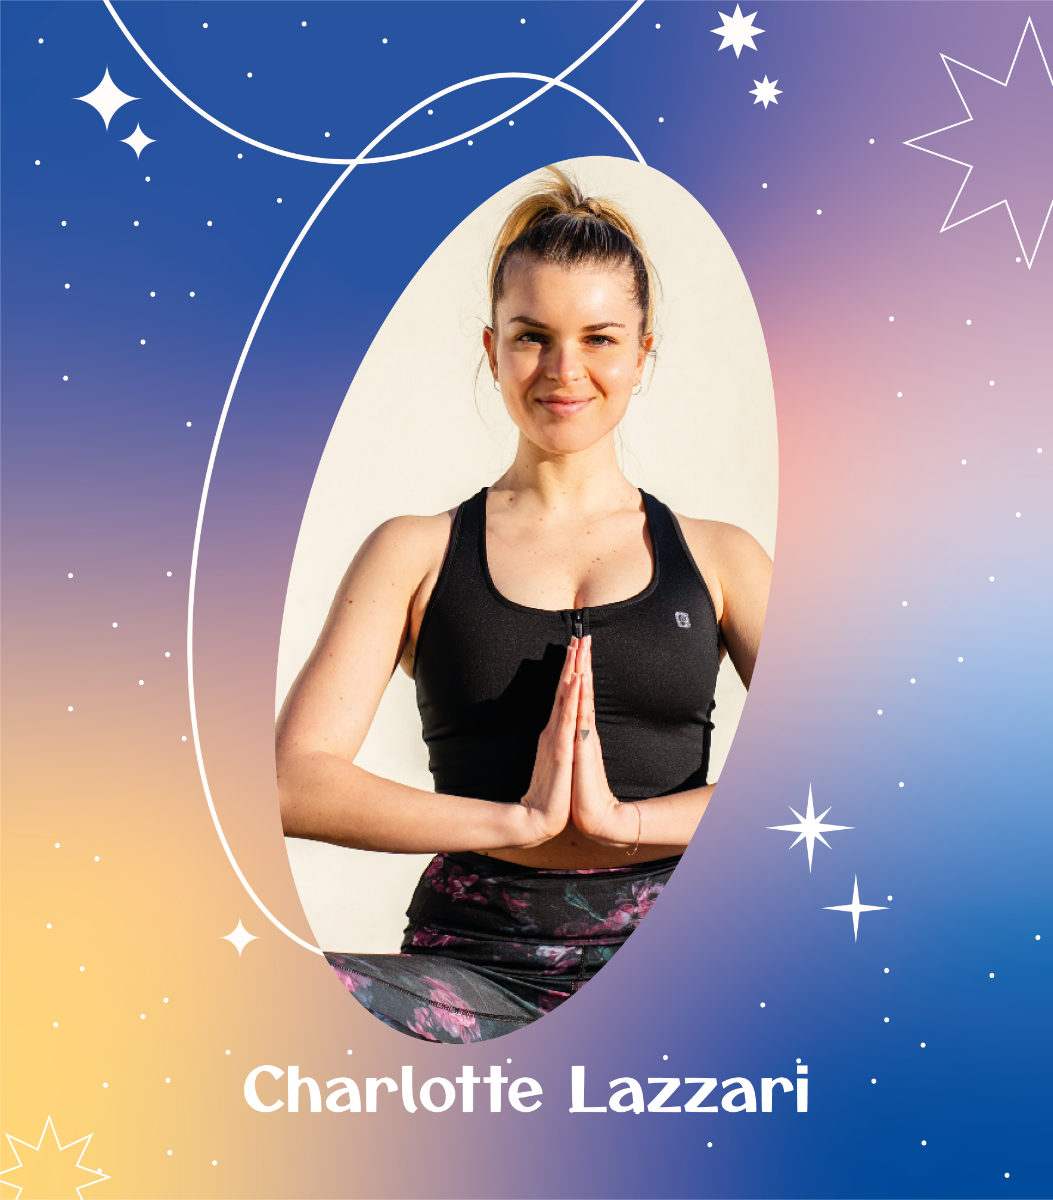 Charlotte Lazzari